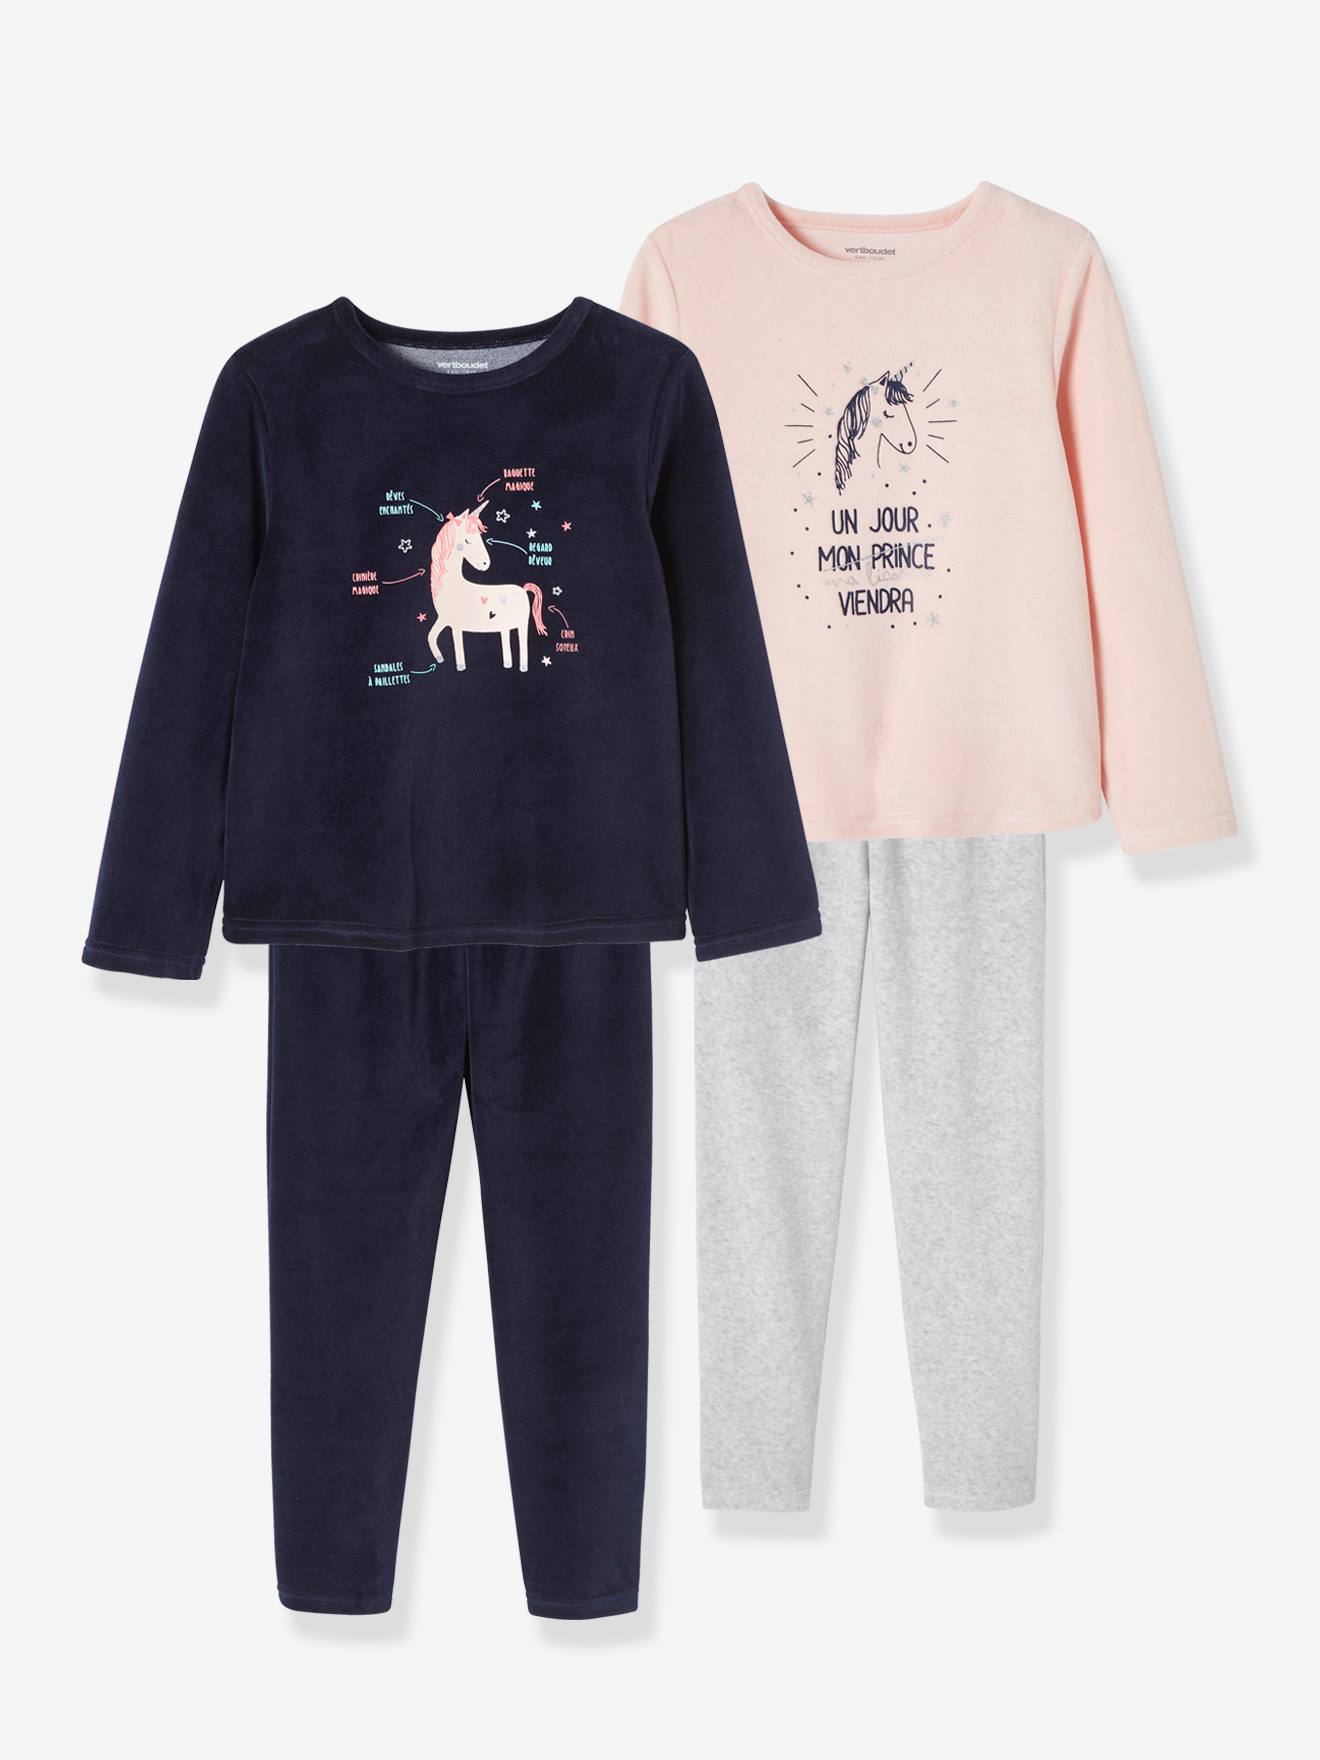 Sterrenprint kinder pyjama's Kleding Meisjeskleding Pyjamas & Badjassen Pyjama Sets 